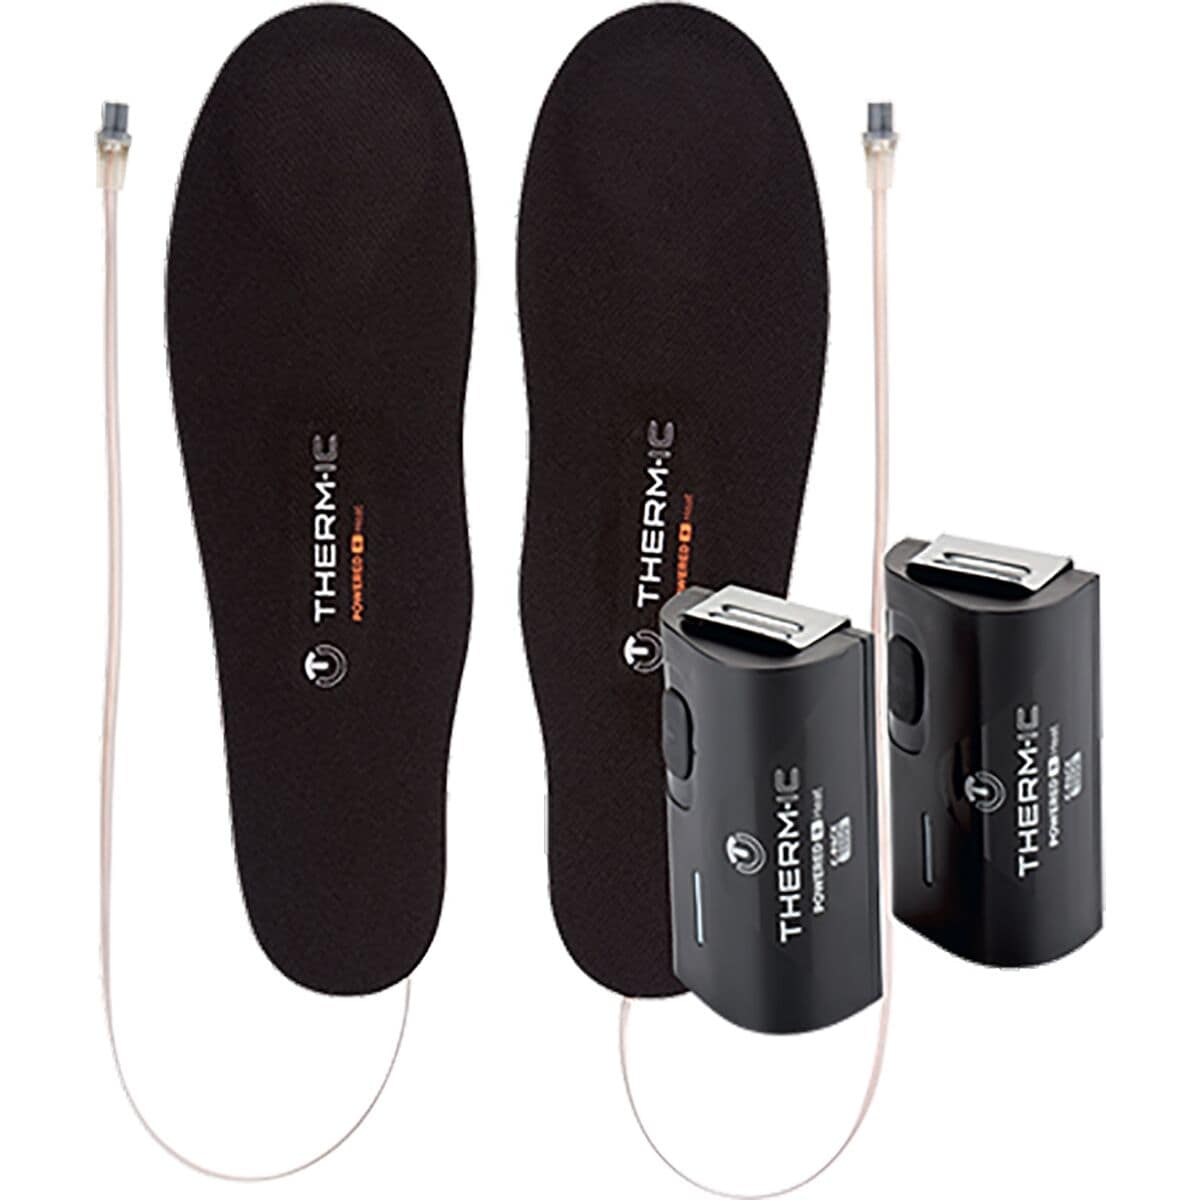 Picknicken zoet Mededogen Therm-ic Insole Heat Flat + C-Pack 1300 Bluetooth - Ski